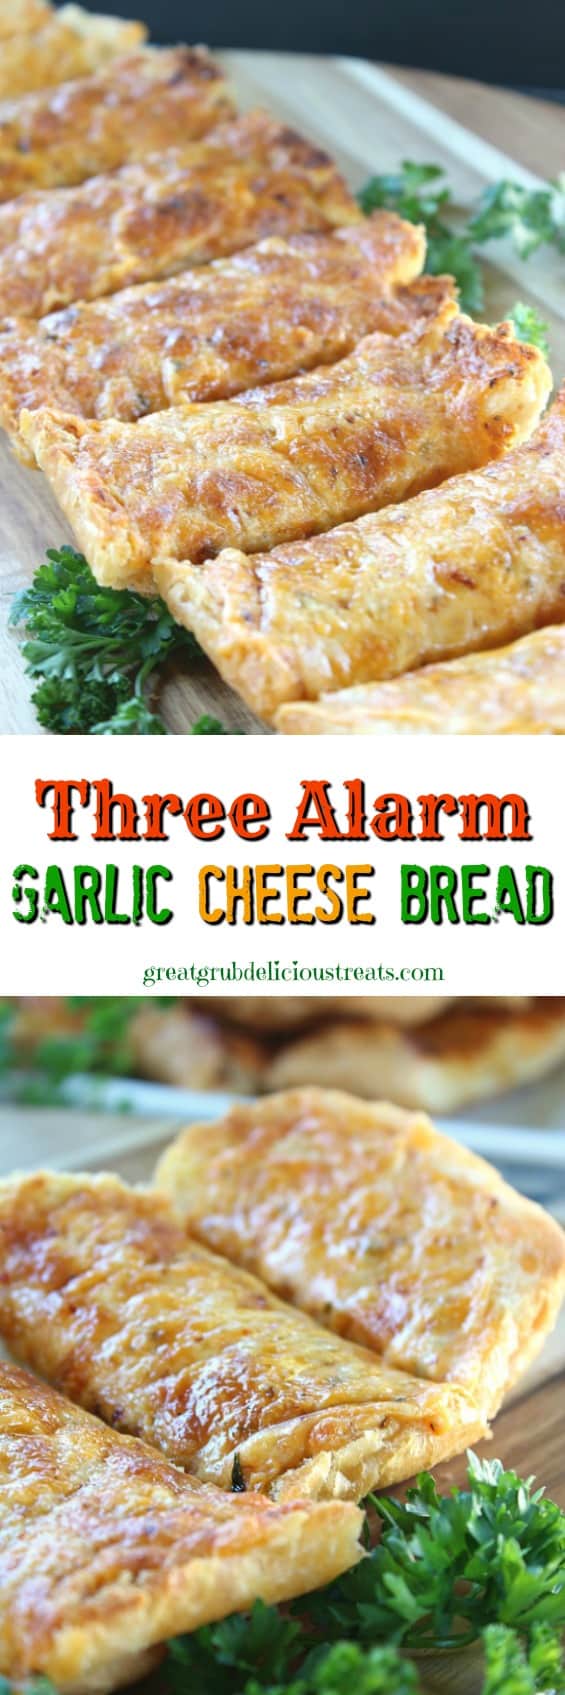 Three Alarm Garlic Cheese Bread